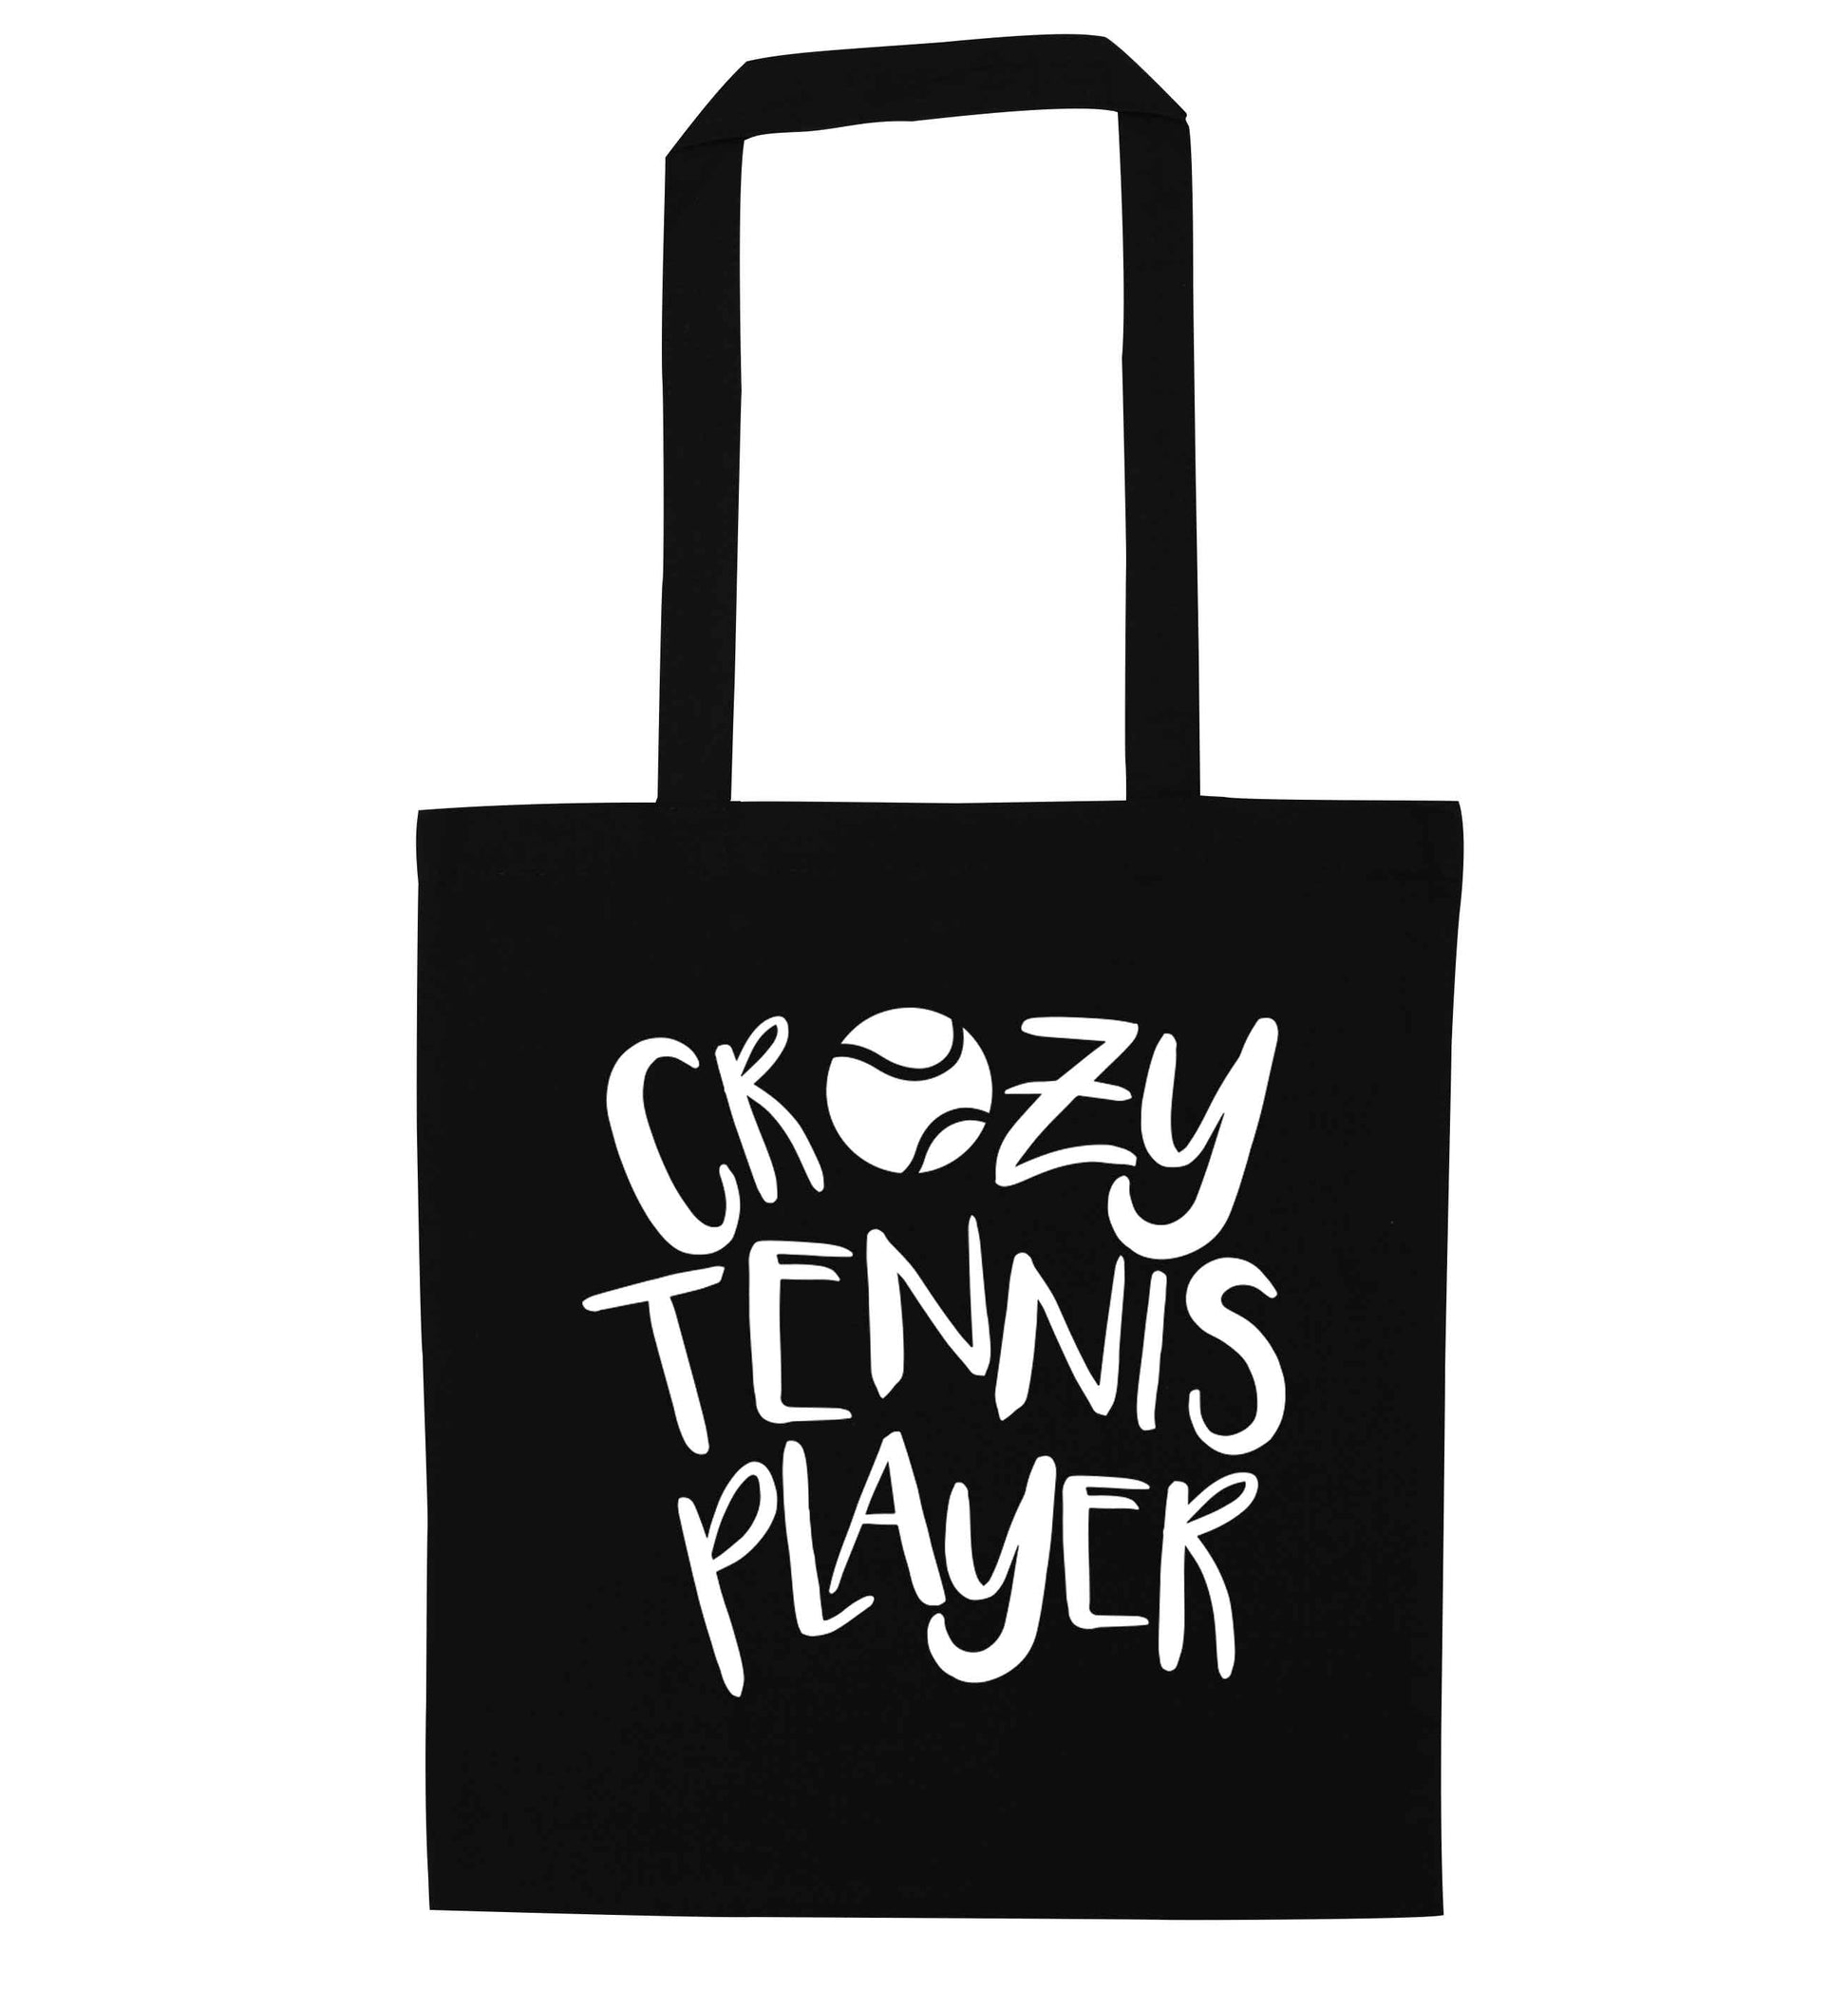 Crazy tennis player black tote bag